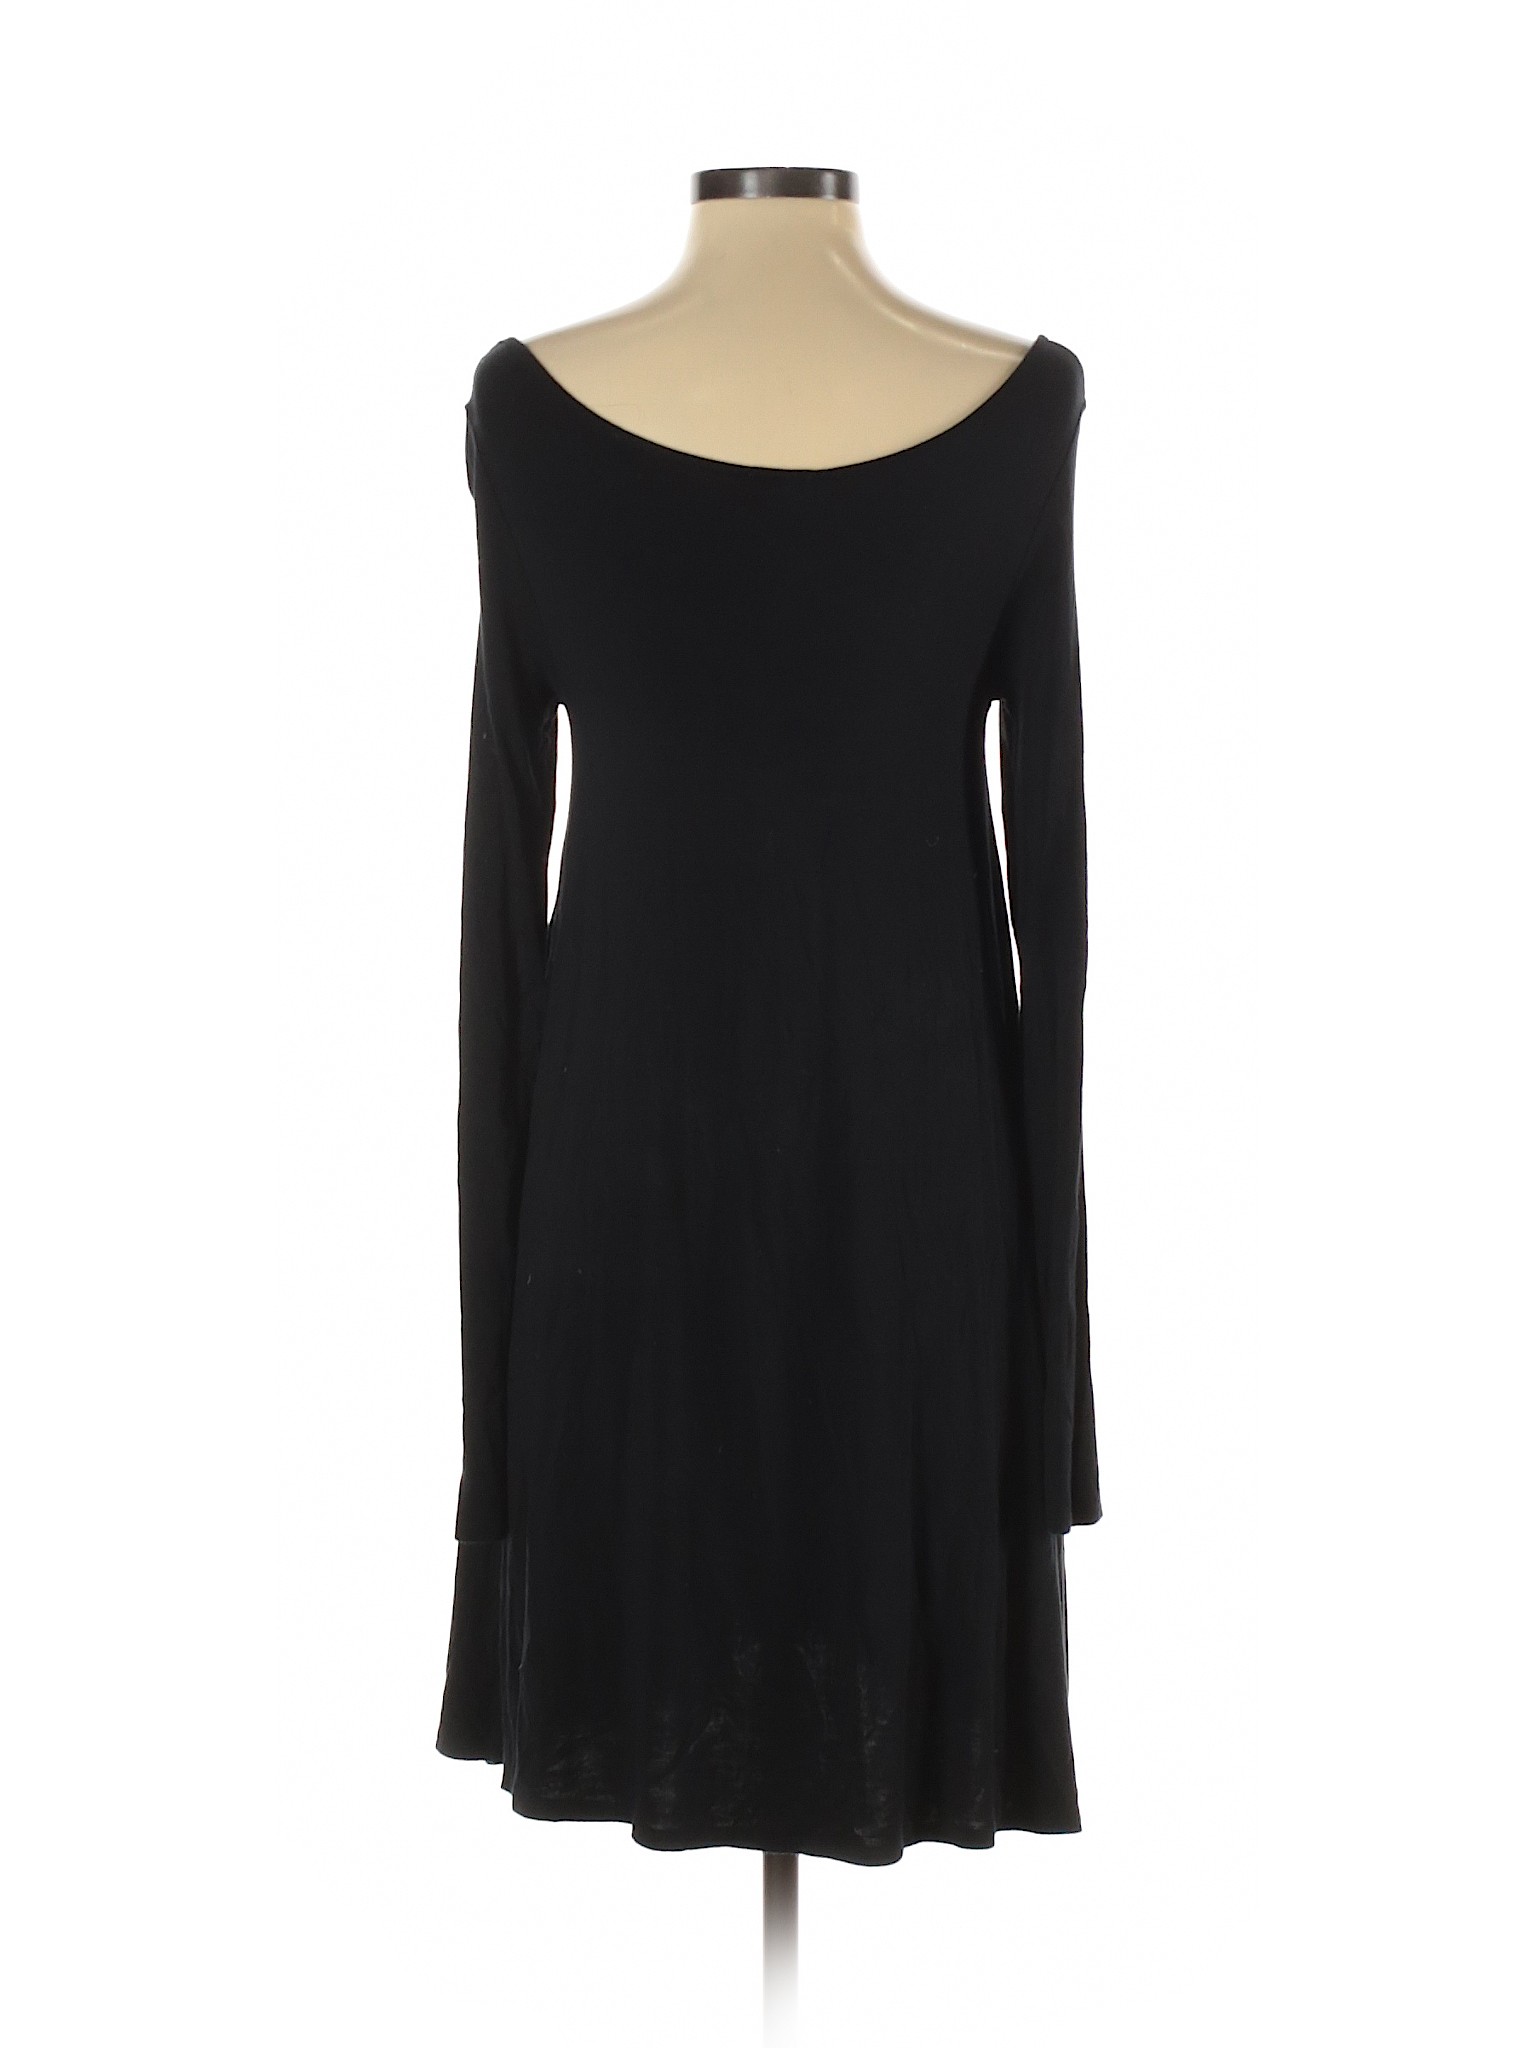 Garage Women Black Casual Dress S | eBay